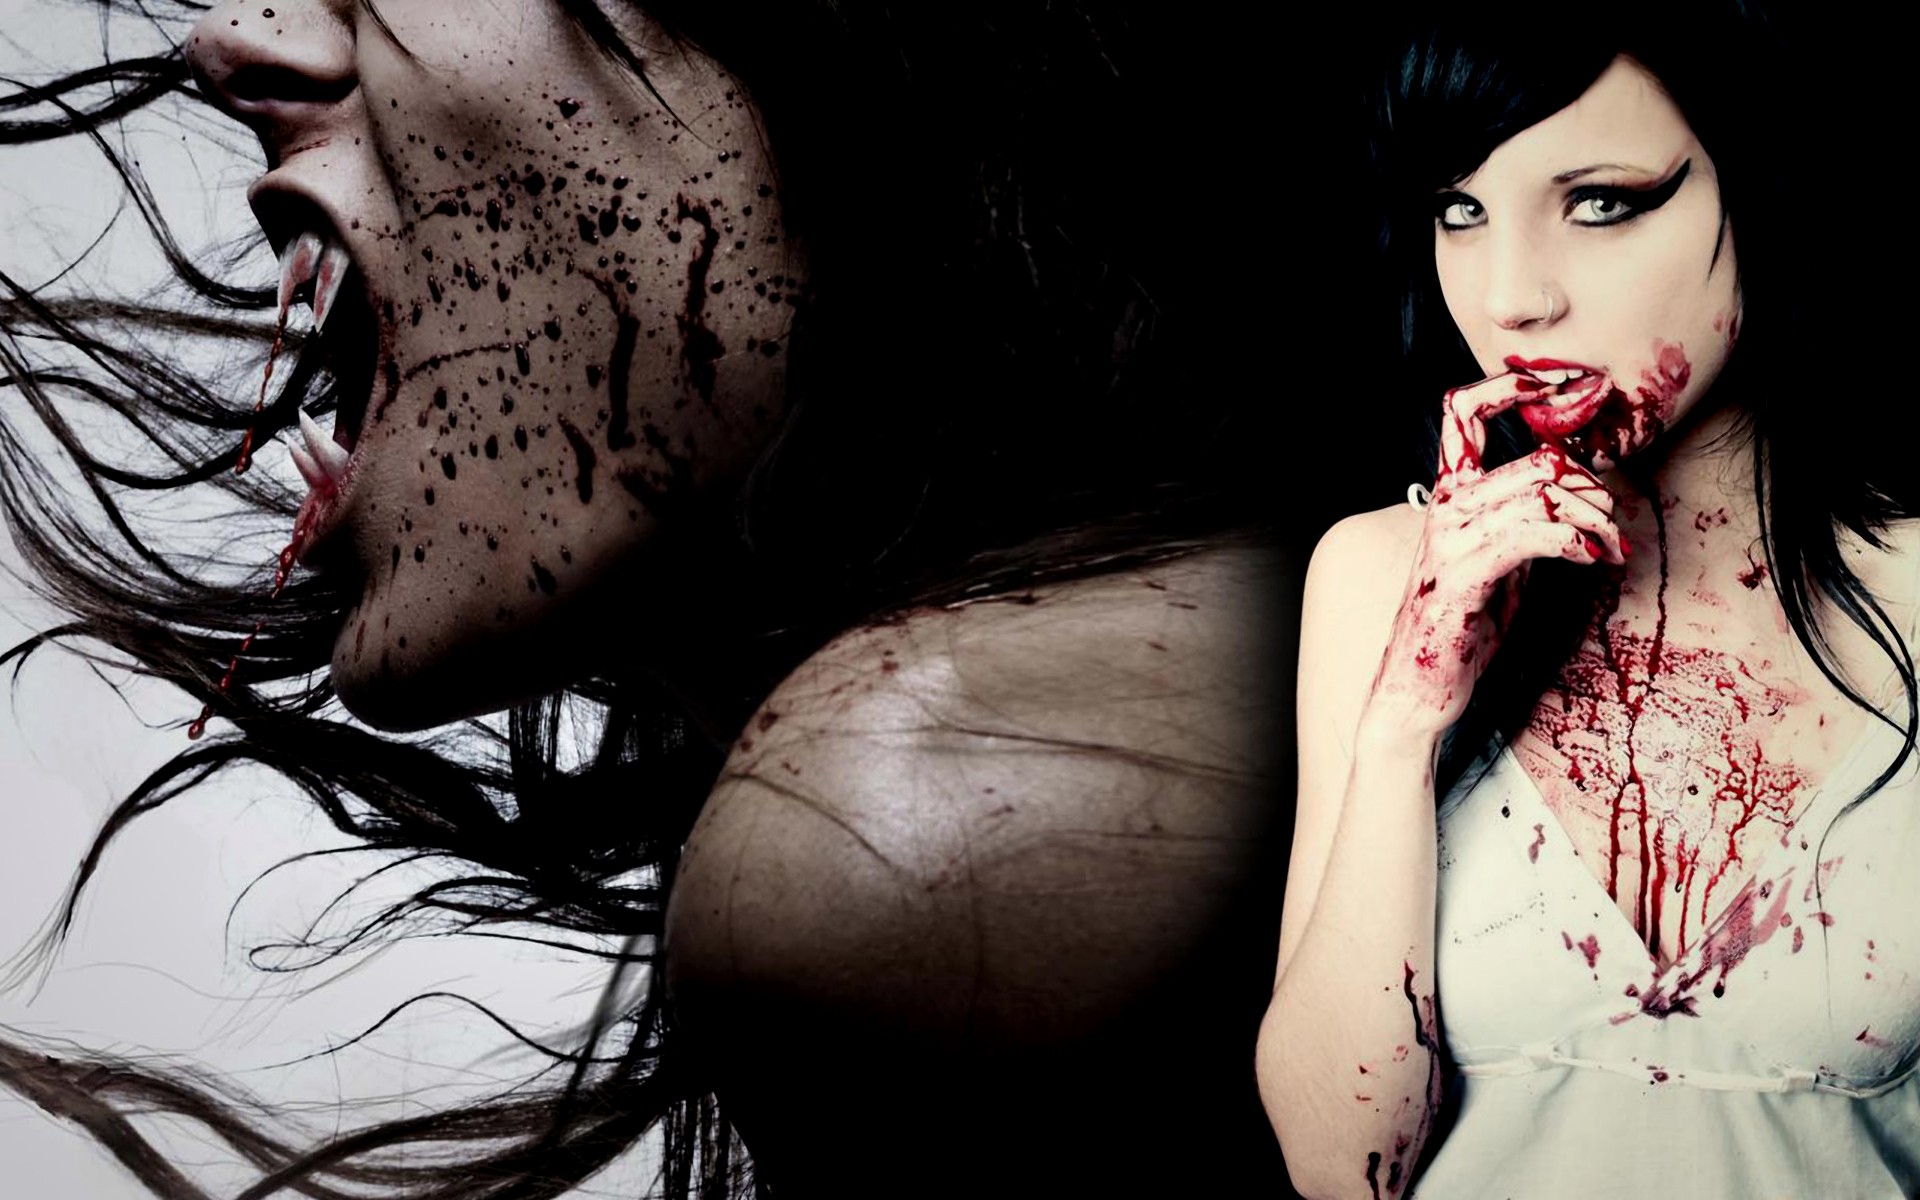 People 1920x1200 blood fangs creepy women vampires black hair white dress finger in mouth makeup dress looking at viewer